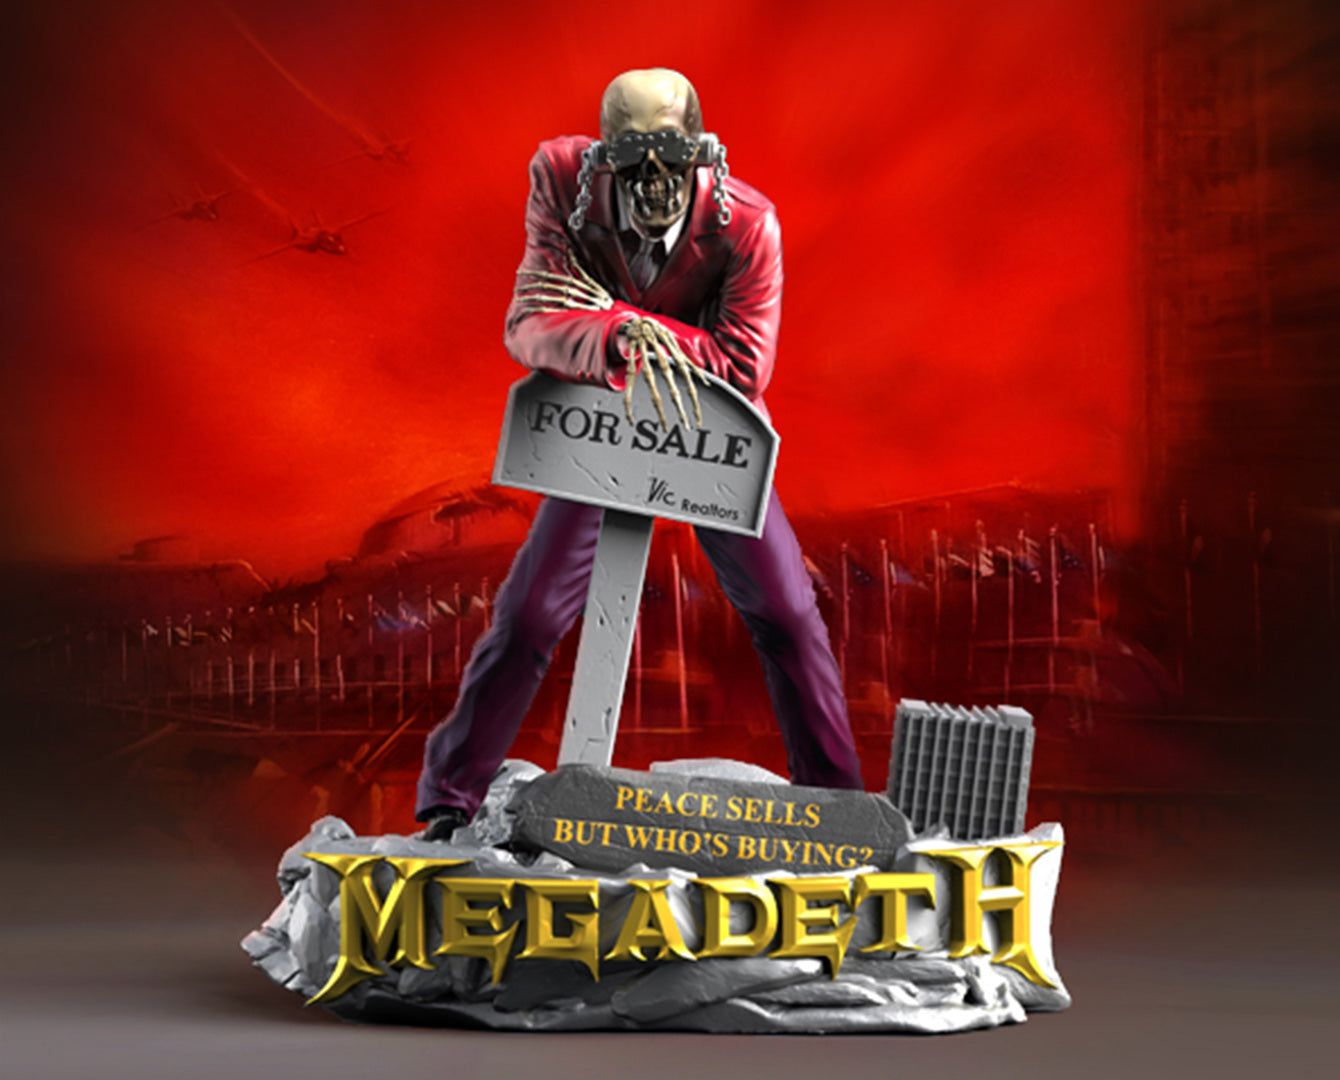 Megadeth ‘Peace Sells’ Vic Rattlehead KnuckleBonz Statue